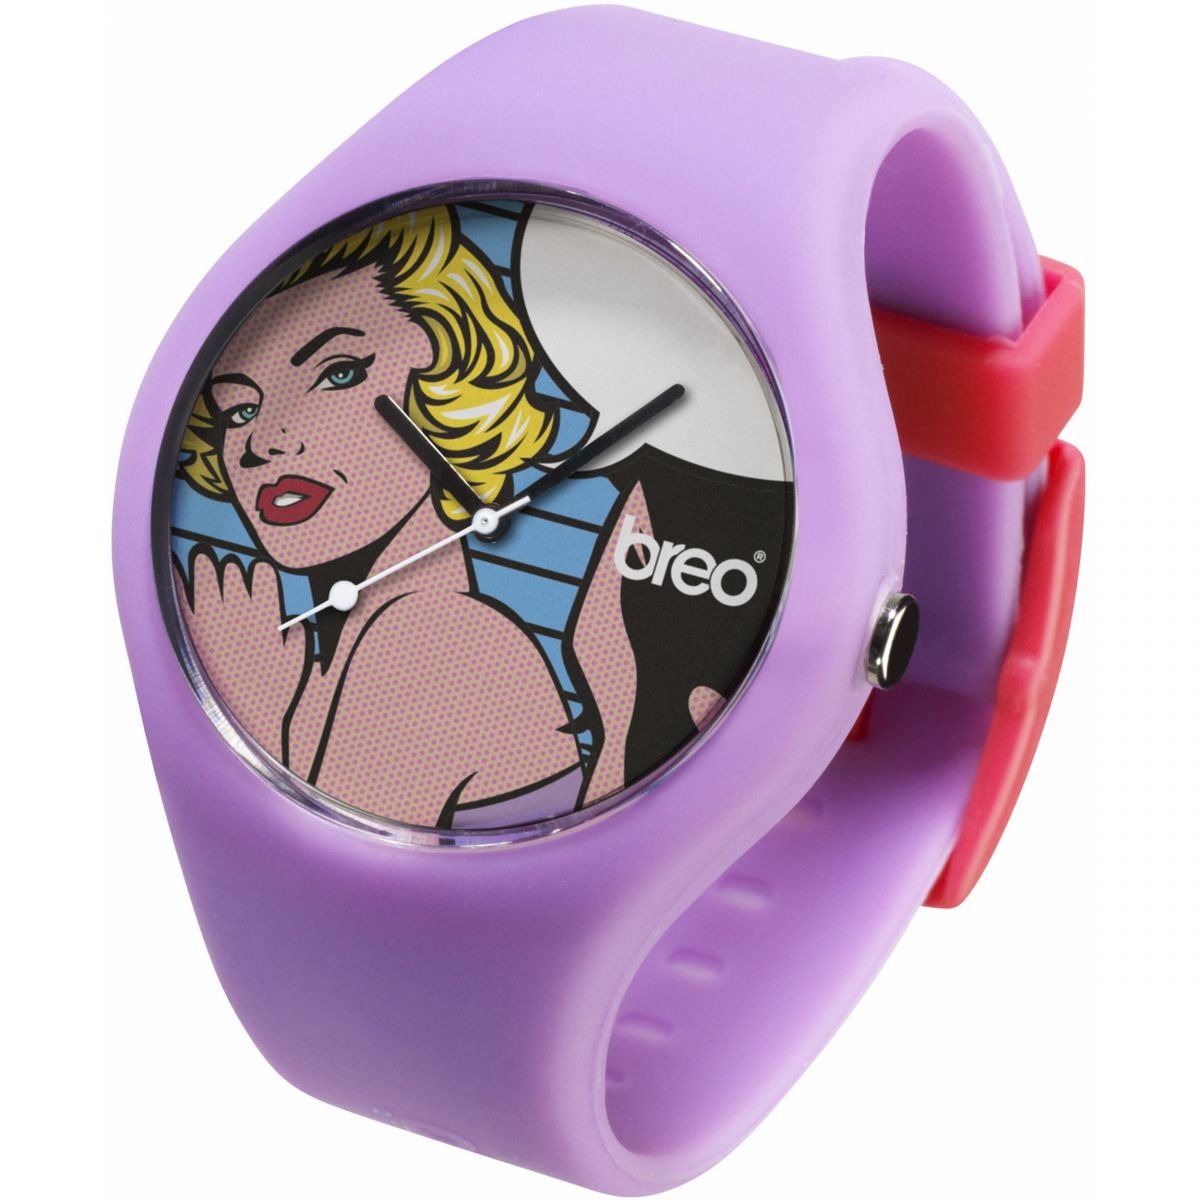 Watch Shop - Men's Watch in Multicolor from Breo GOOFASH